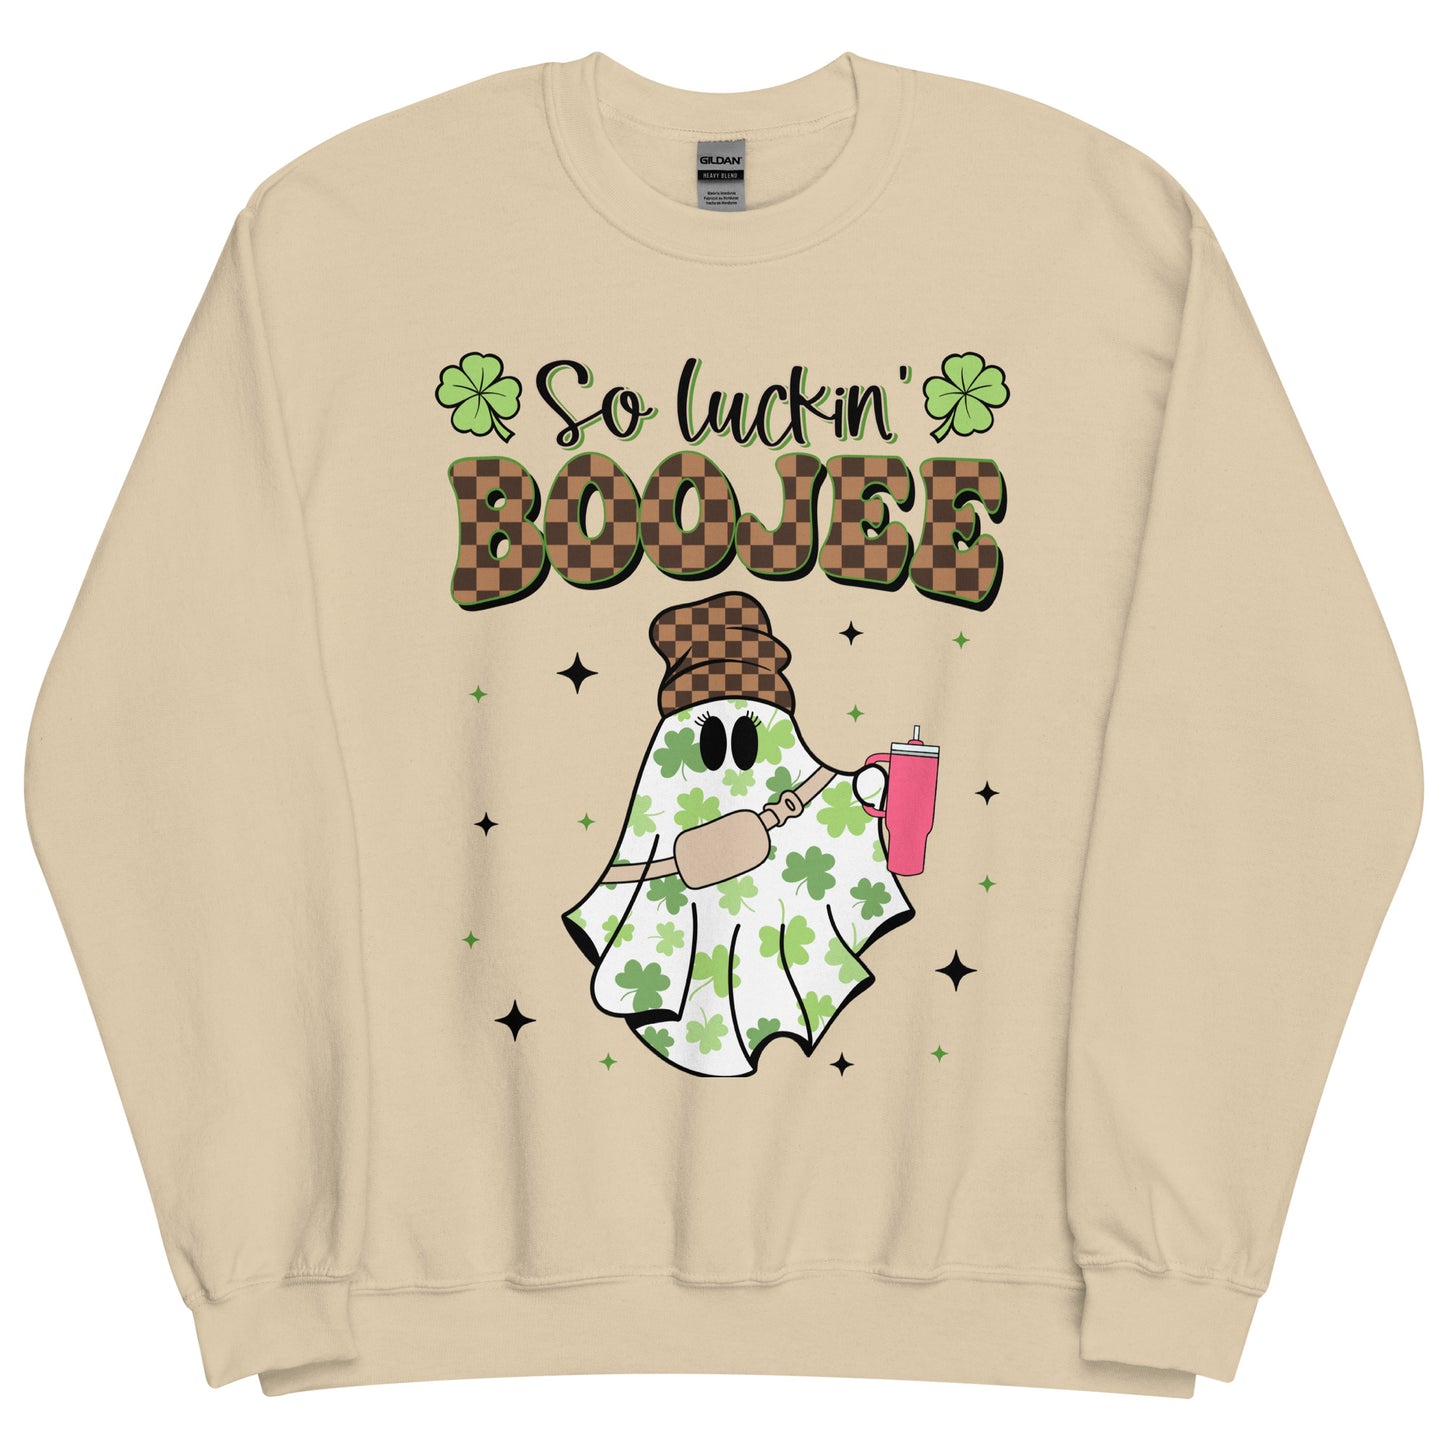 So Luckin' Boojee Sweatshirt